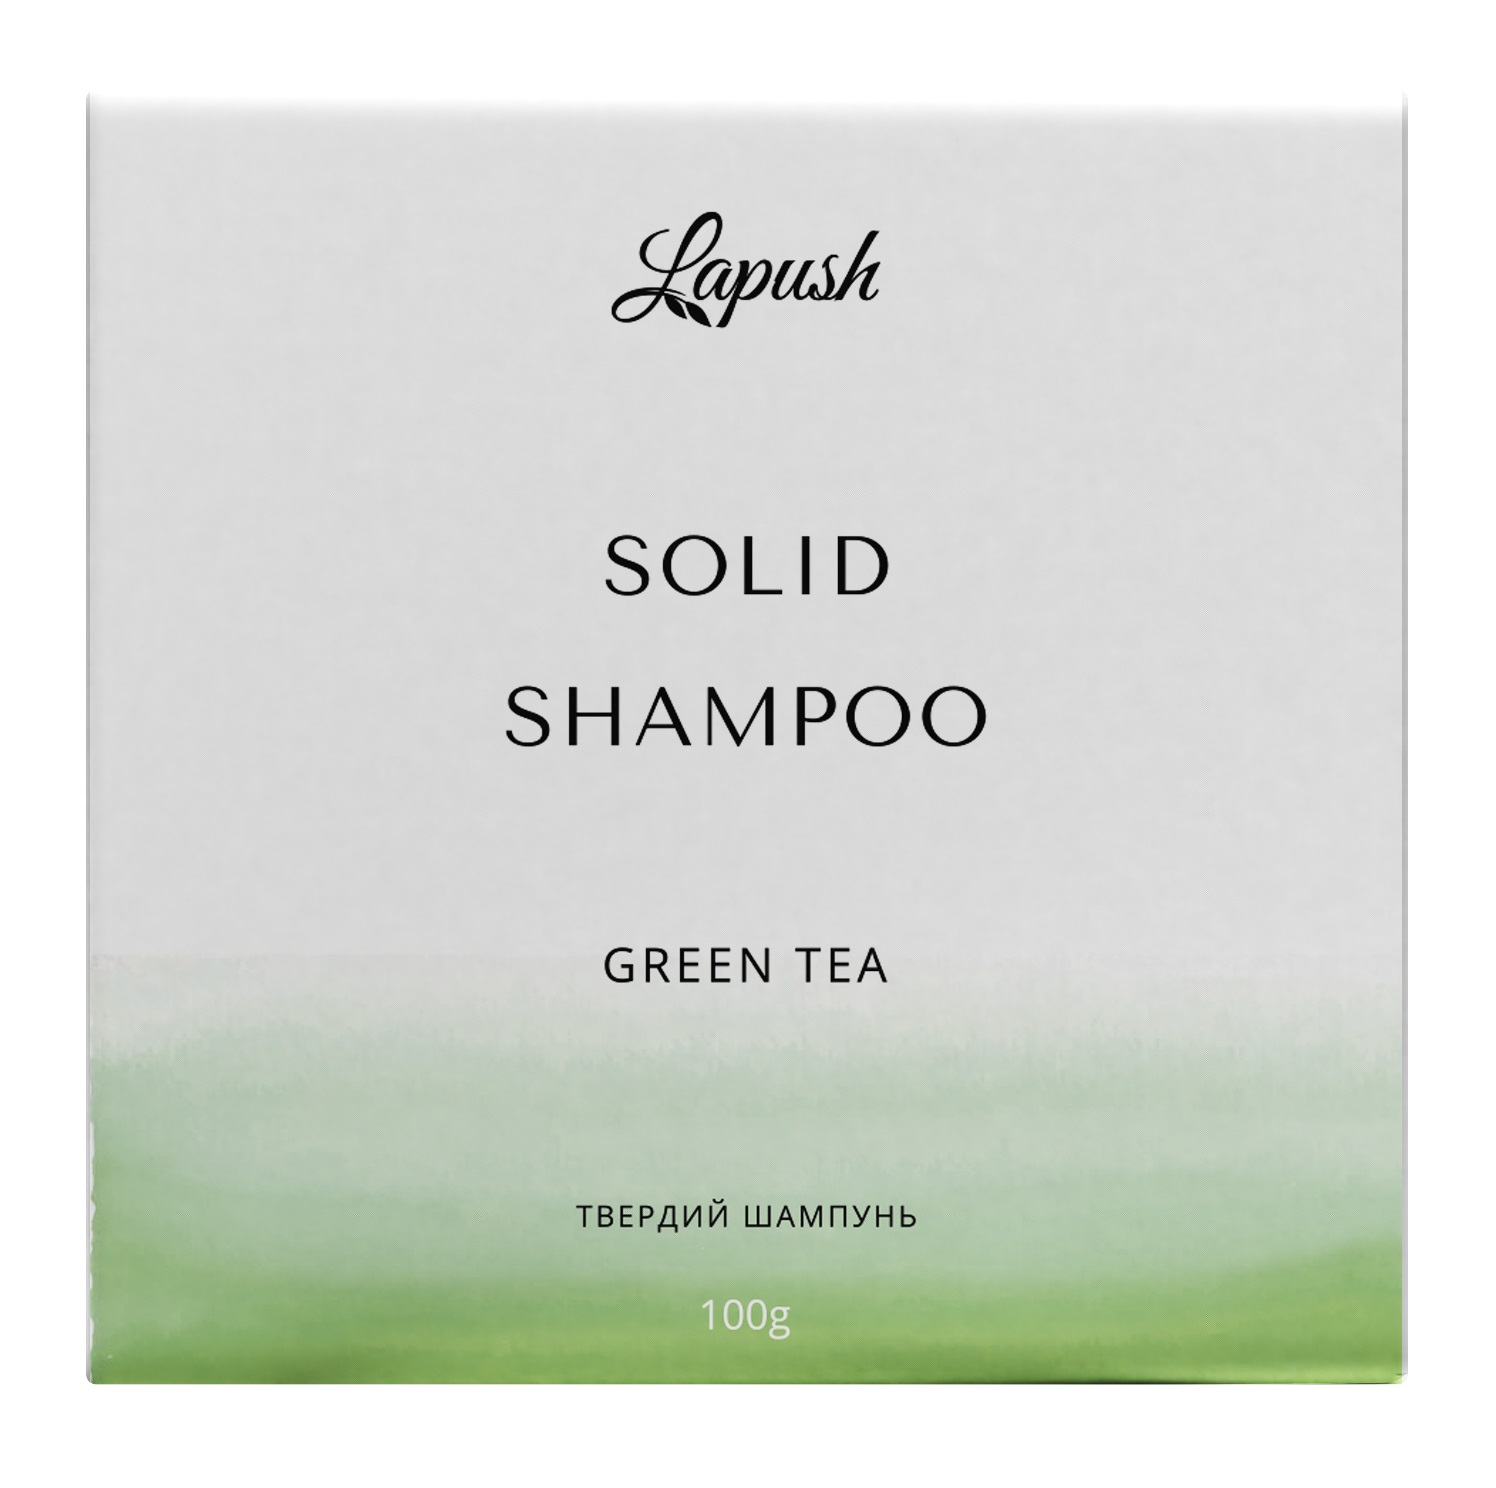 Твердый шампунь Lapush Green Tea, 100 г (LP_SHT_GRT_70) - фото 2